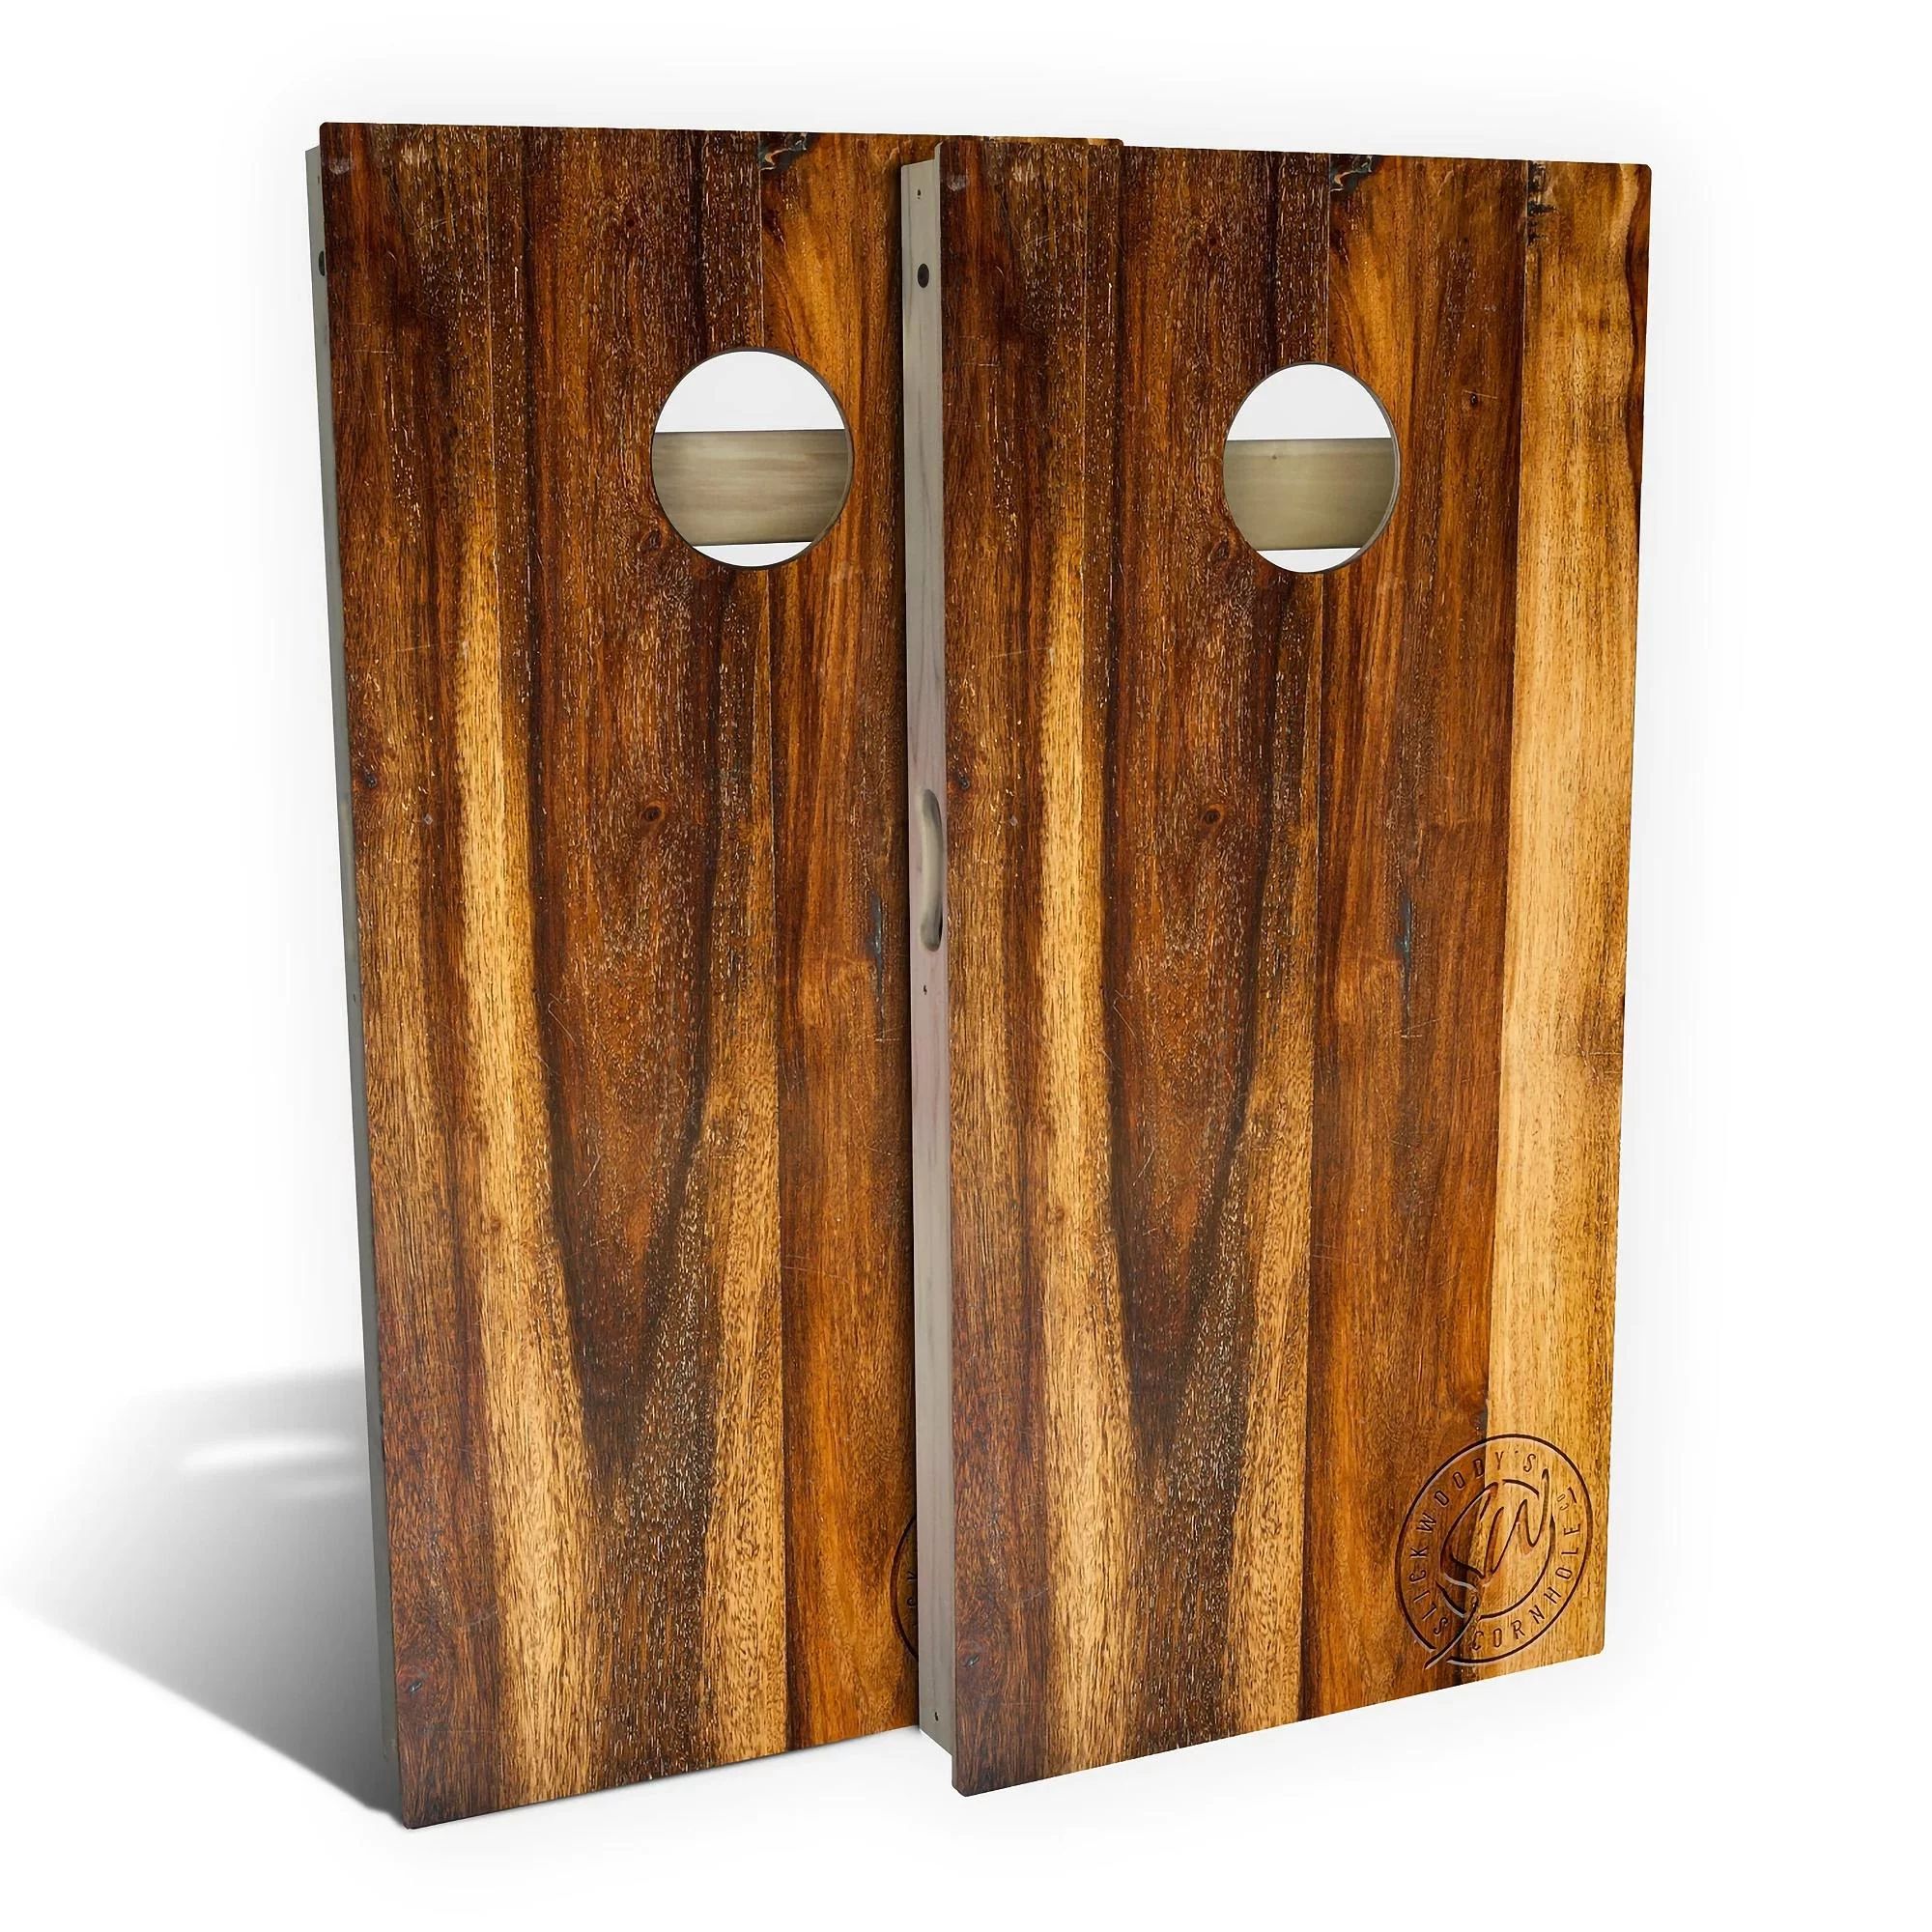 Treated Oak Design Cornhole Board Set - Choose Your Size & Accessories | Walmart (US)